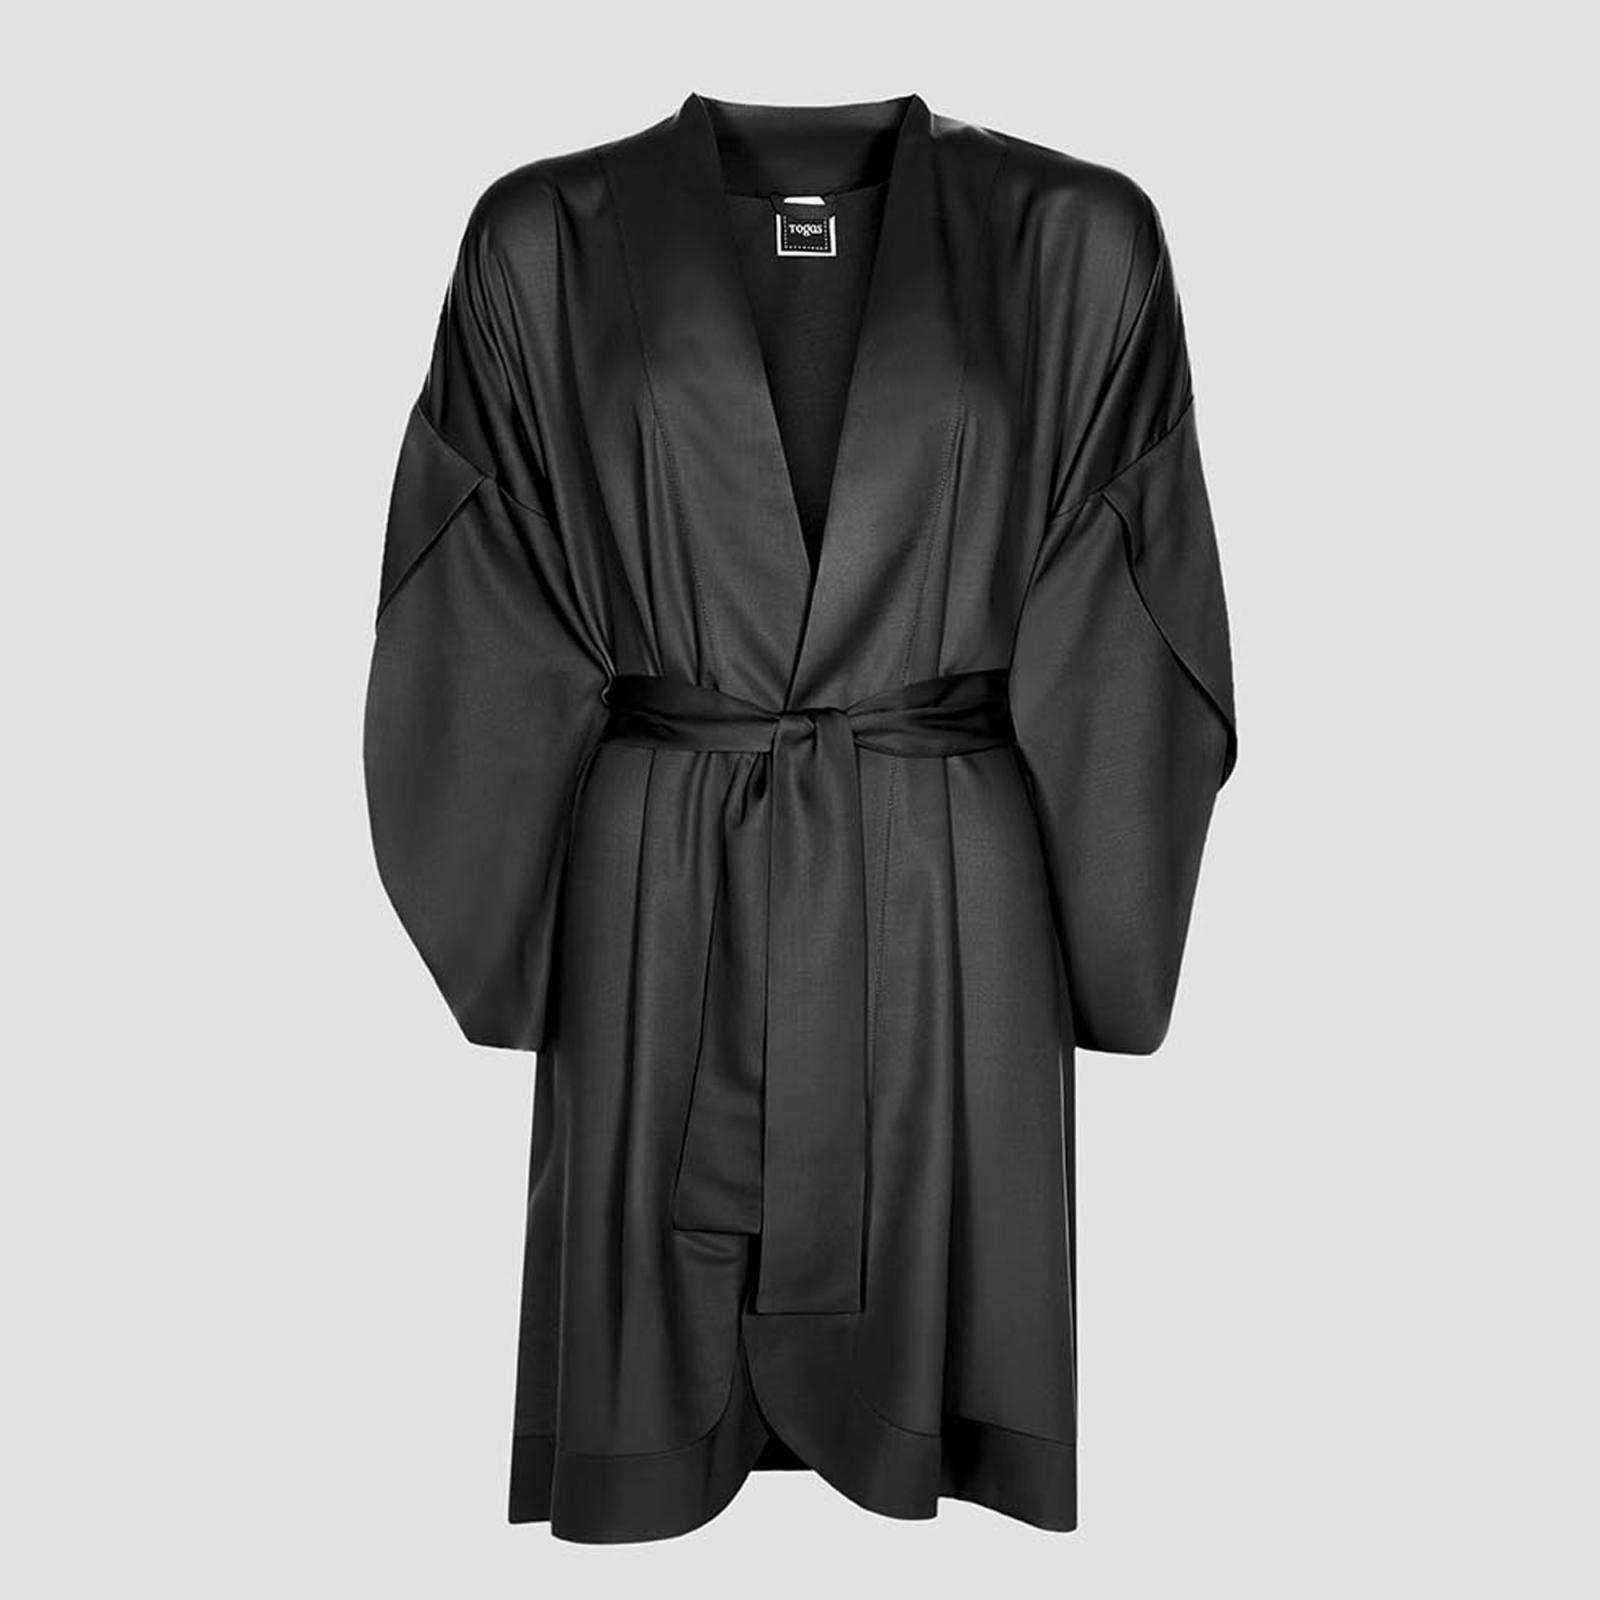 Халат-кимоно короткое Togas Наоми чёрное XS (42) халат кимоно togas наоми розовый xxl 52